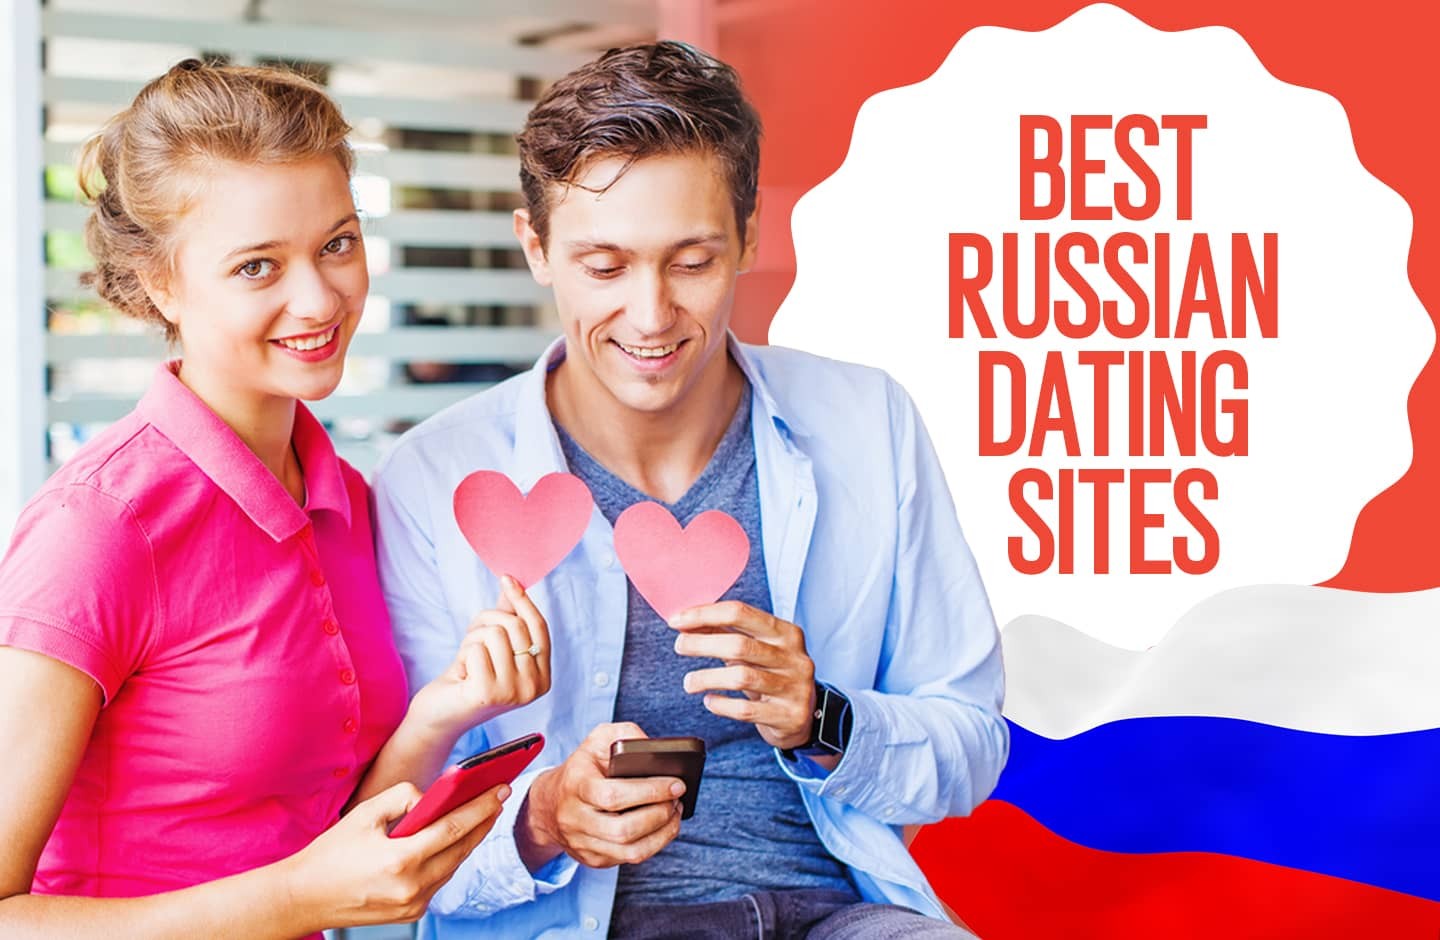 Best Russian Dating Sites To Meet Russian Women Online